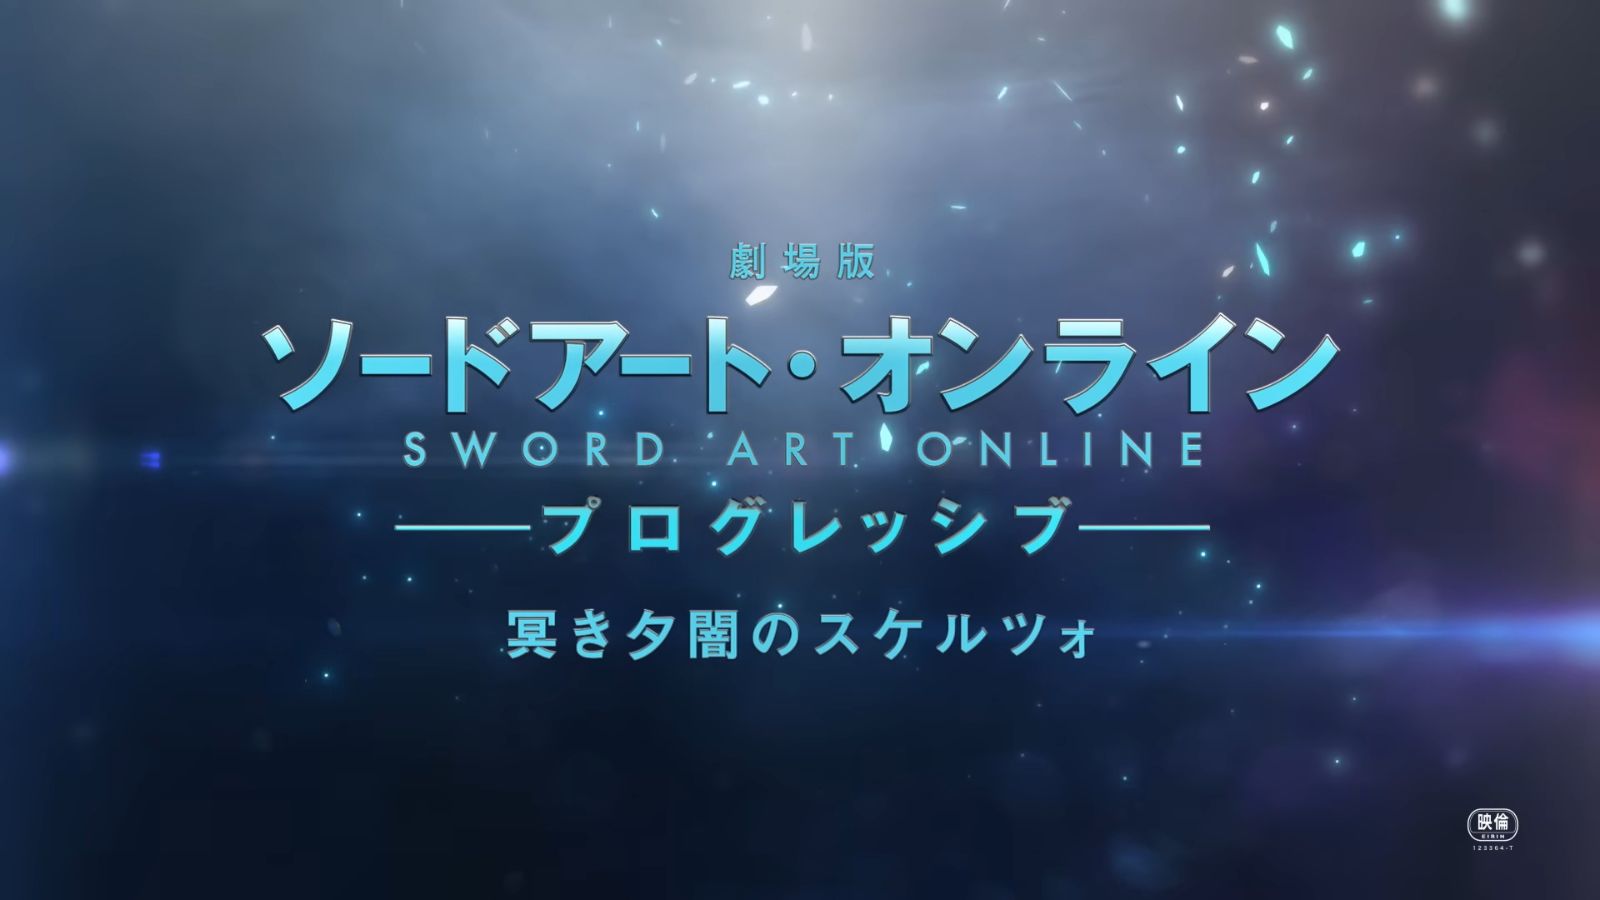 When Will 'Sword Art Online Progressive: Scherzo Of A Dark Dusk' Release?